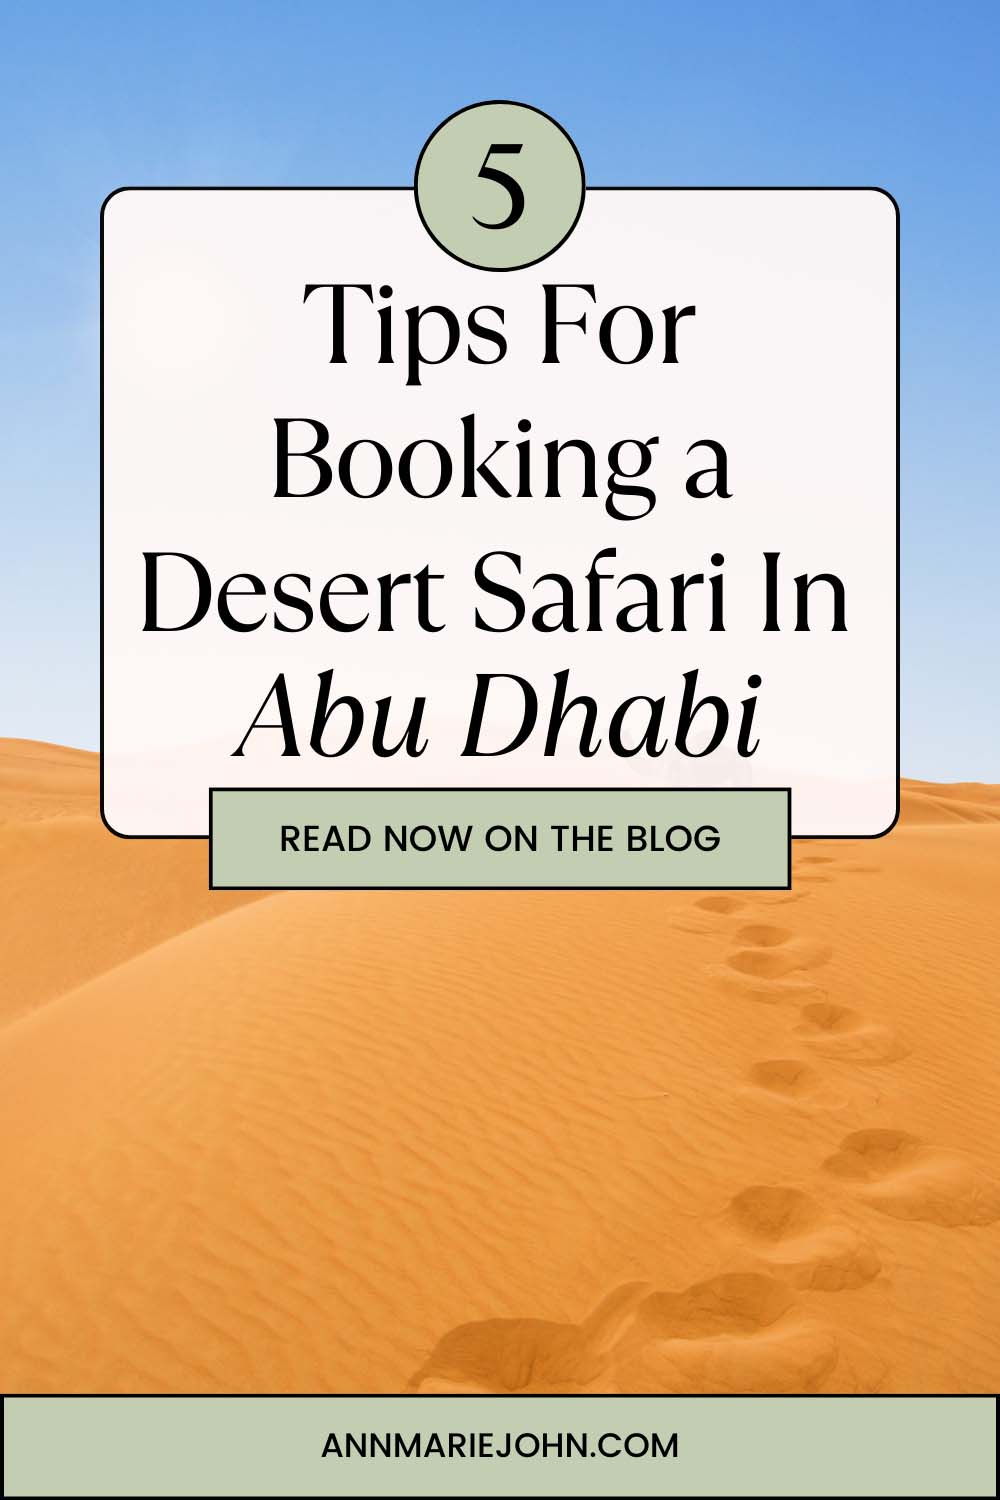 Five Tips For Booking a Desert Safari In Abu Dhabi